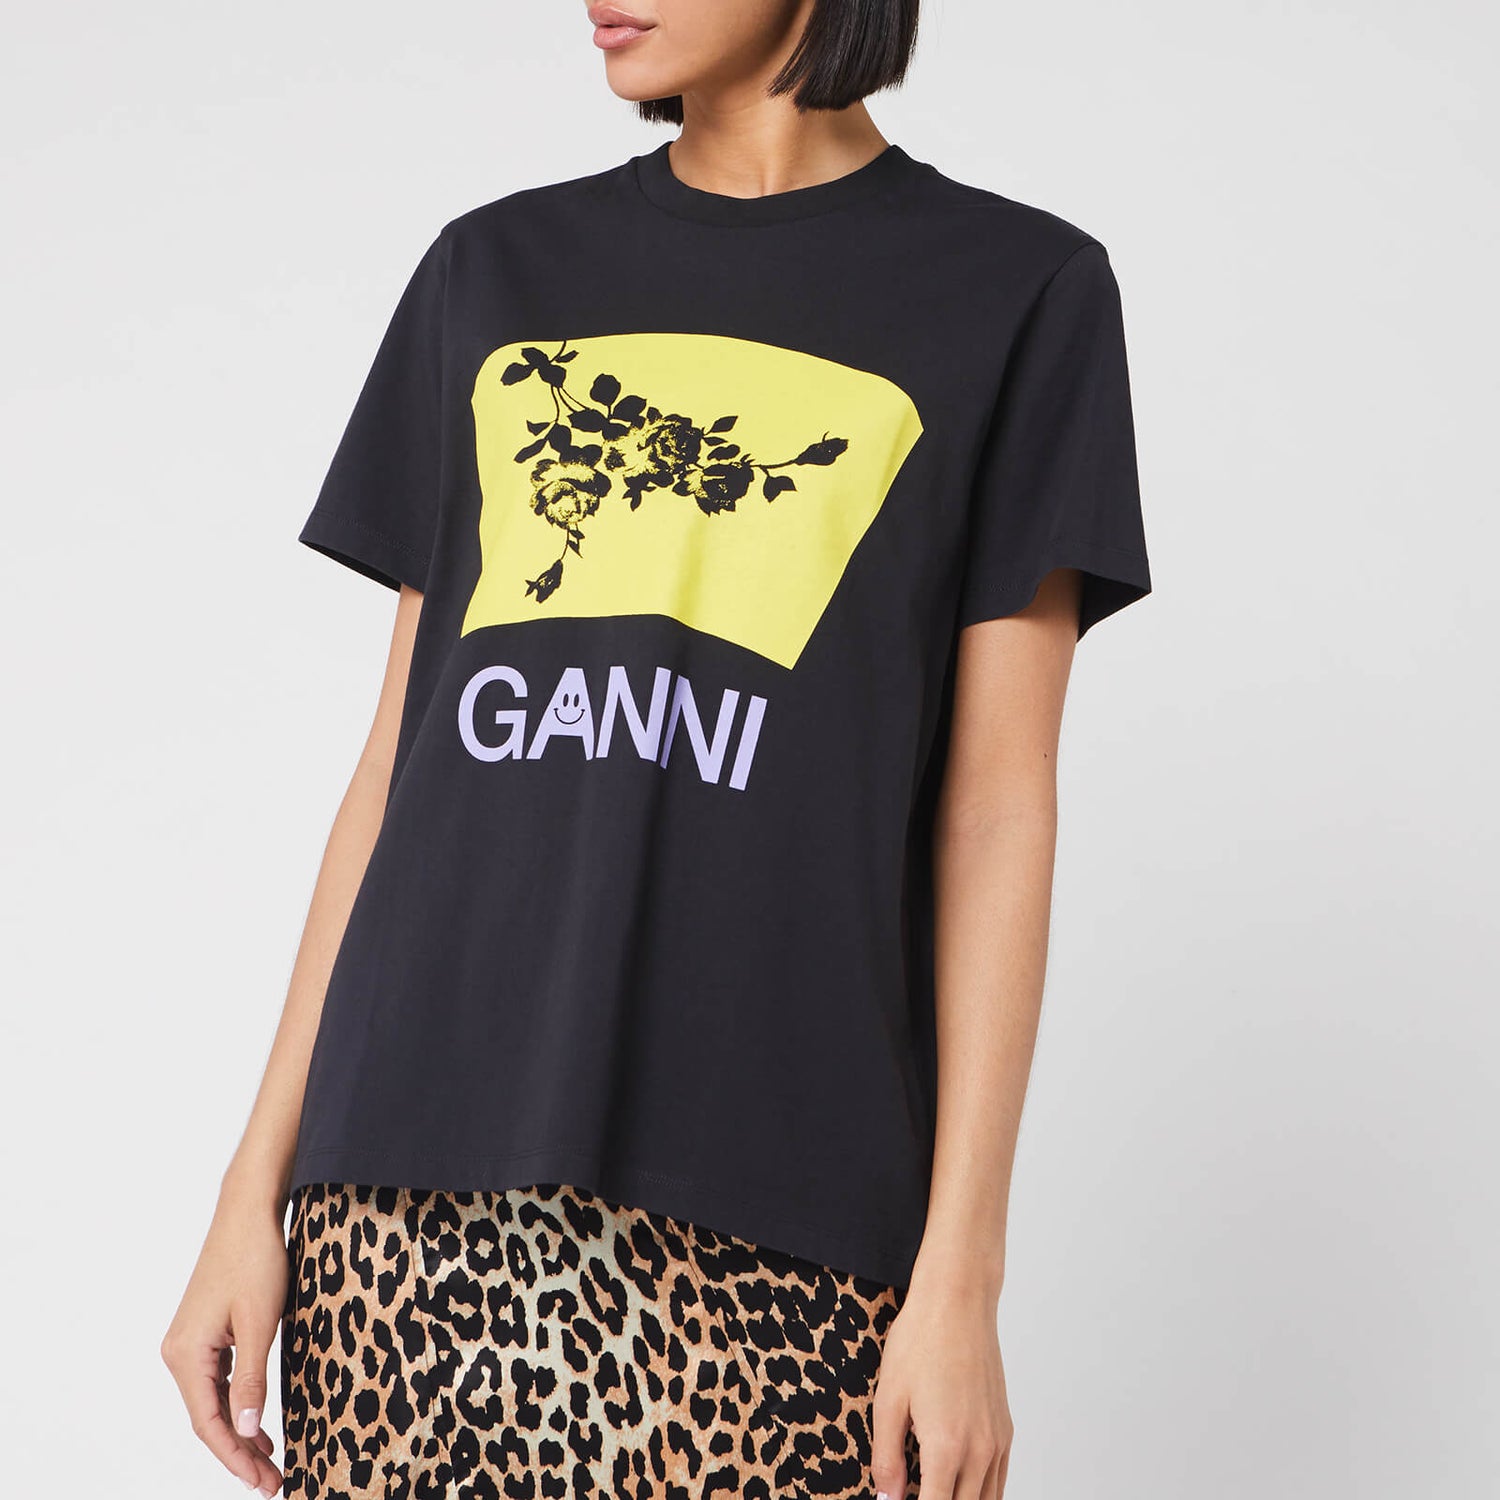 Ganni Women's Floral Graphic Print T-Shirt - Phantom - Free UK Delivery ...